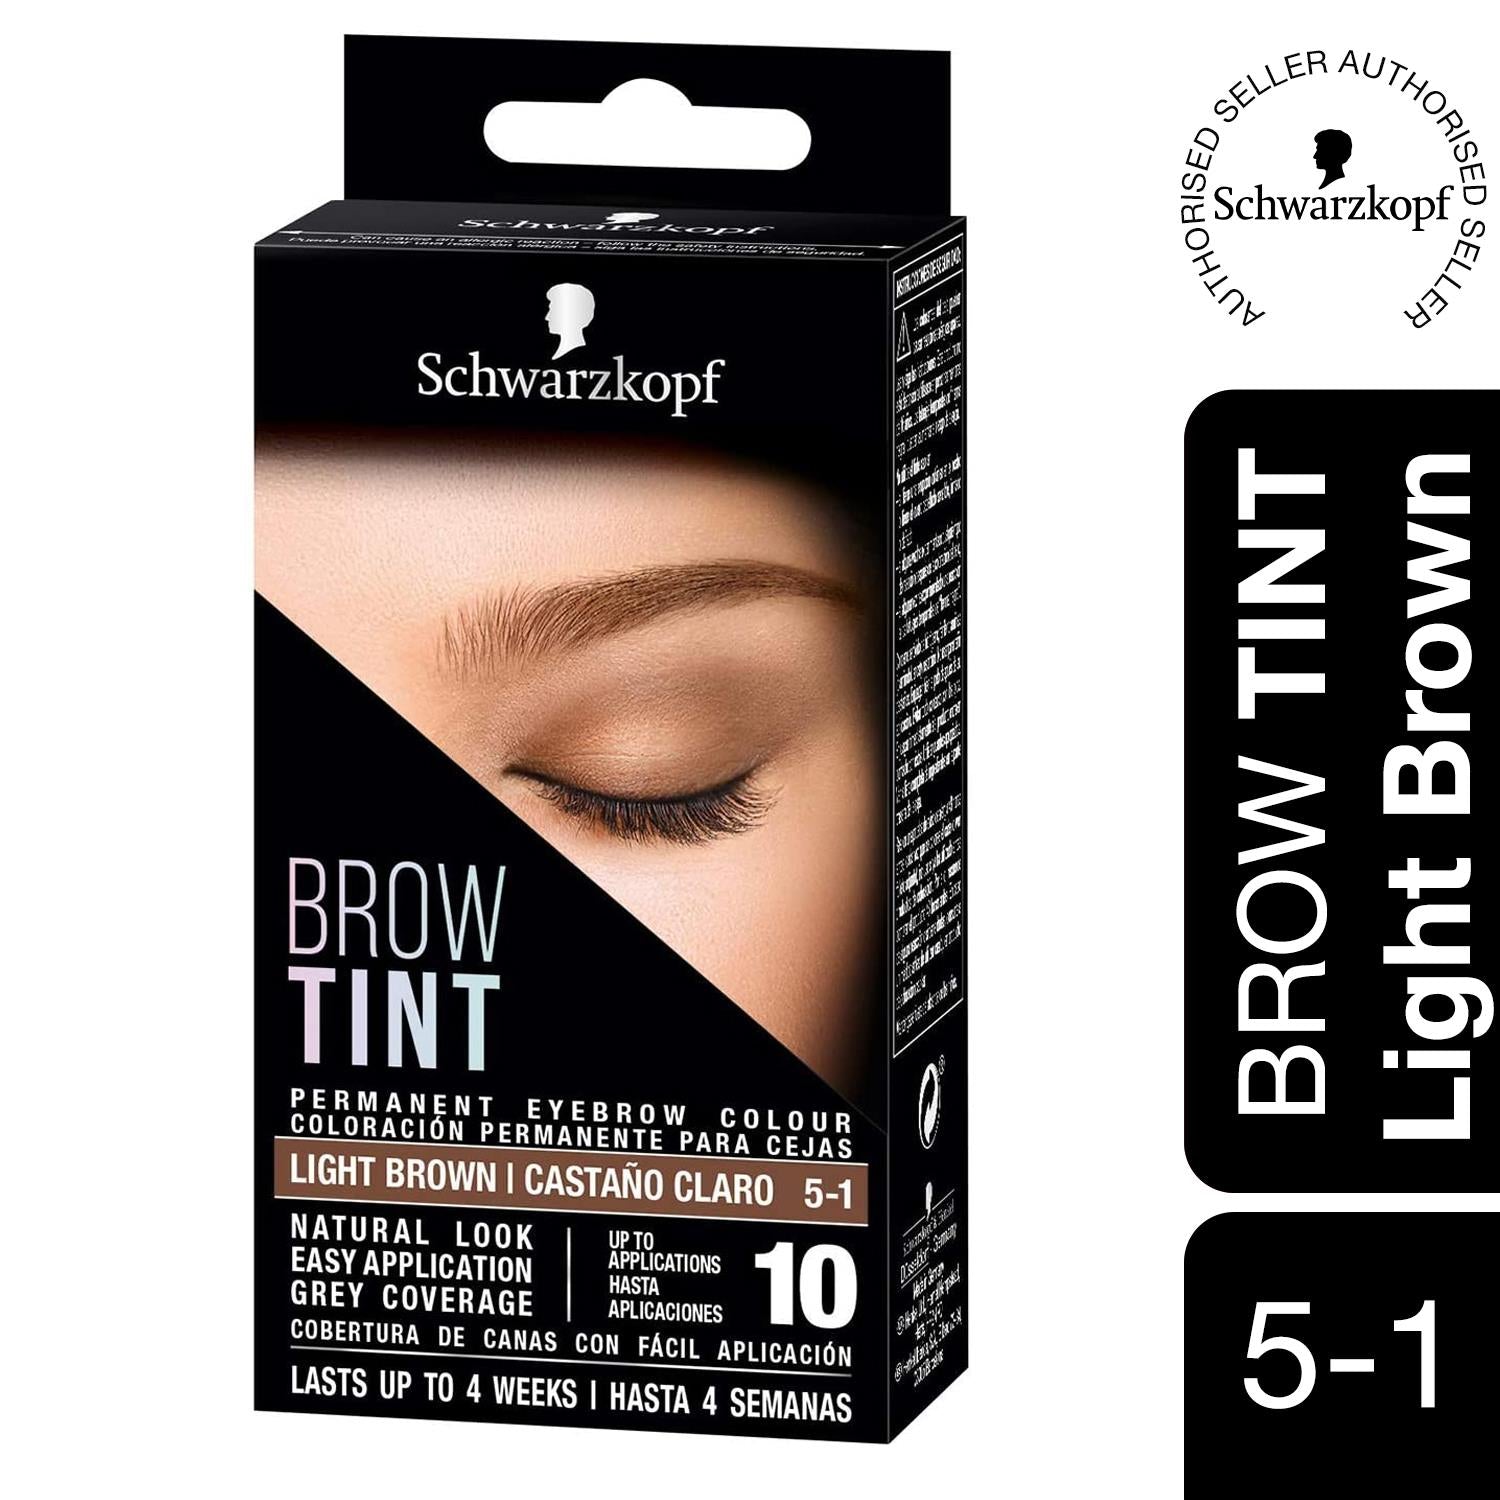 Schwarzkopf Brow Tint Professional Formula Permanent Eyebrow Light Brown 5-1